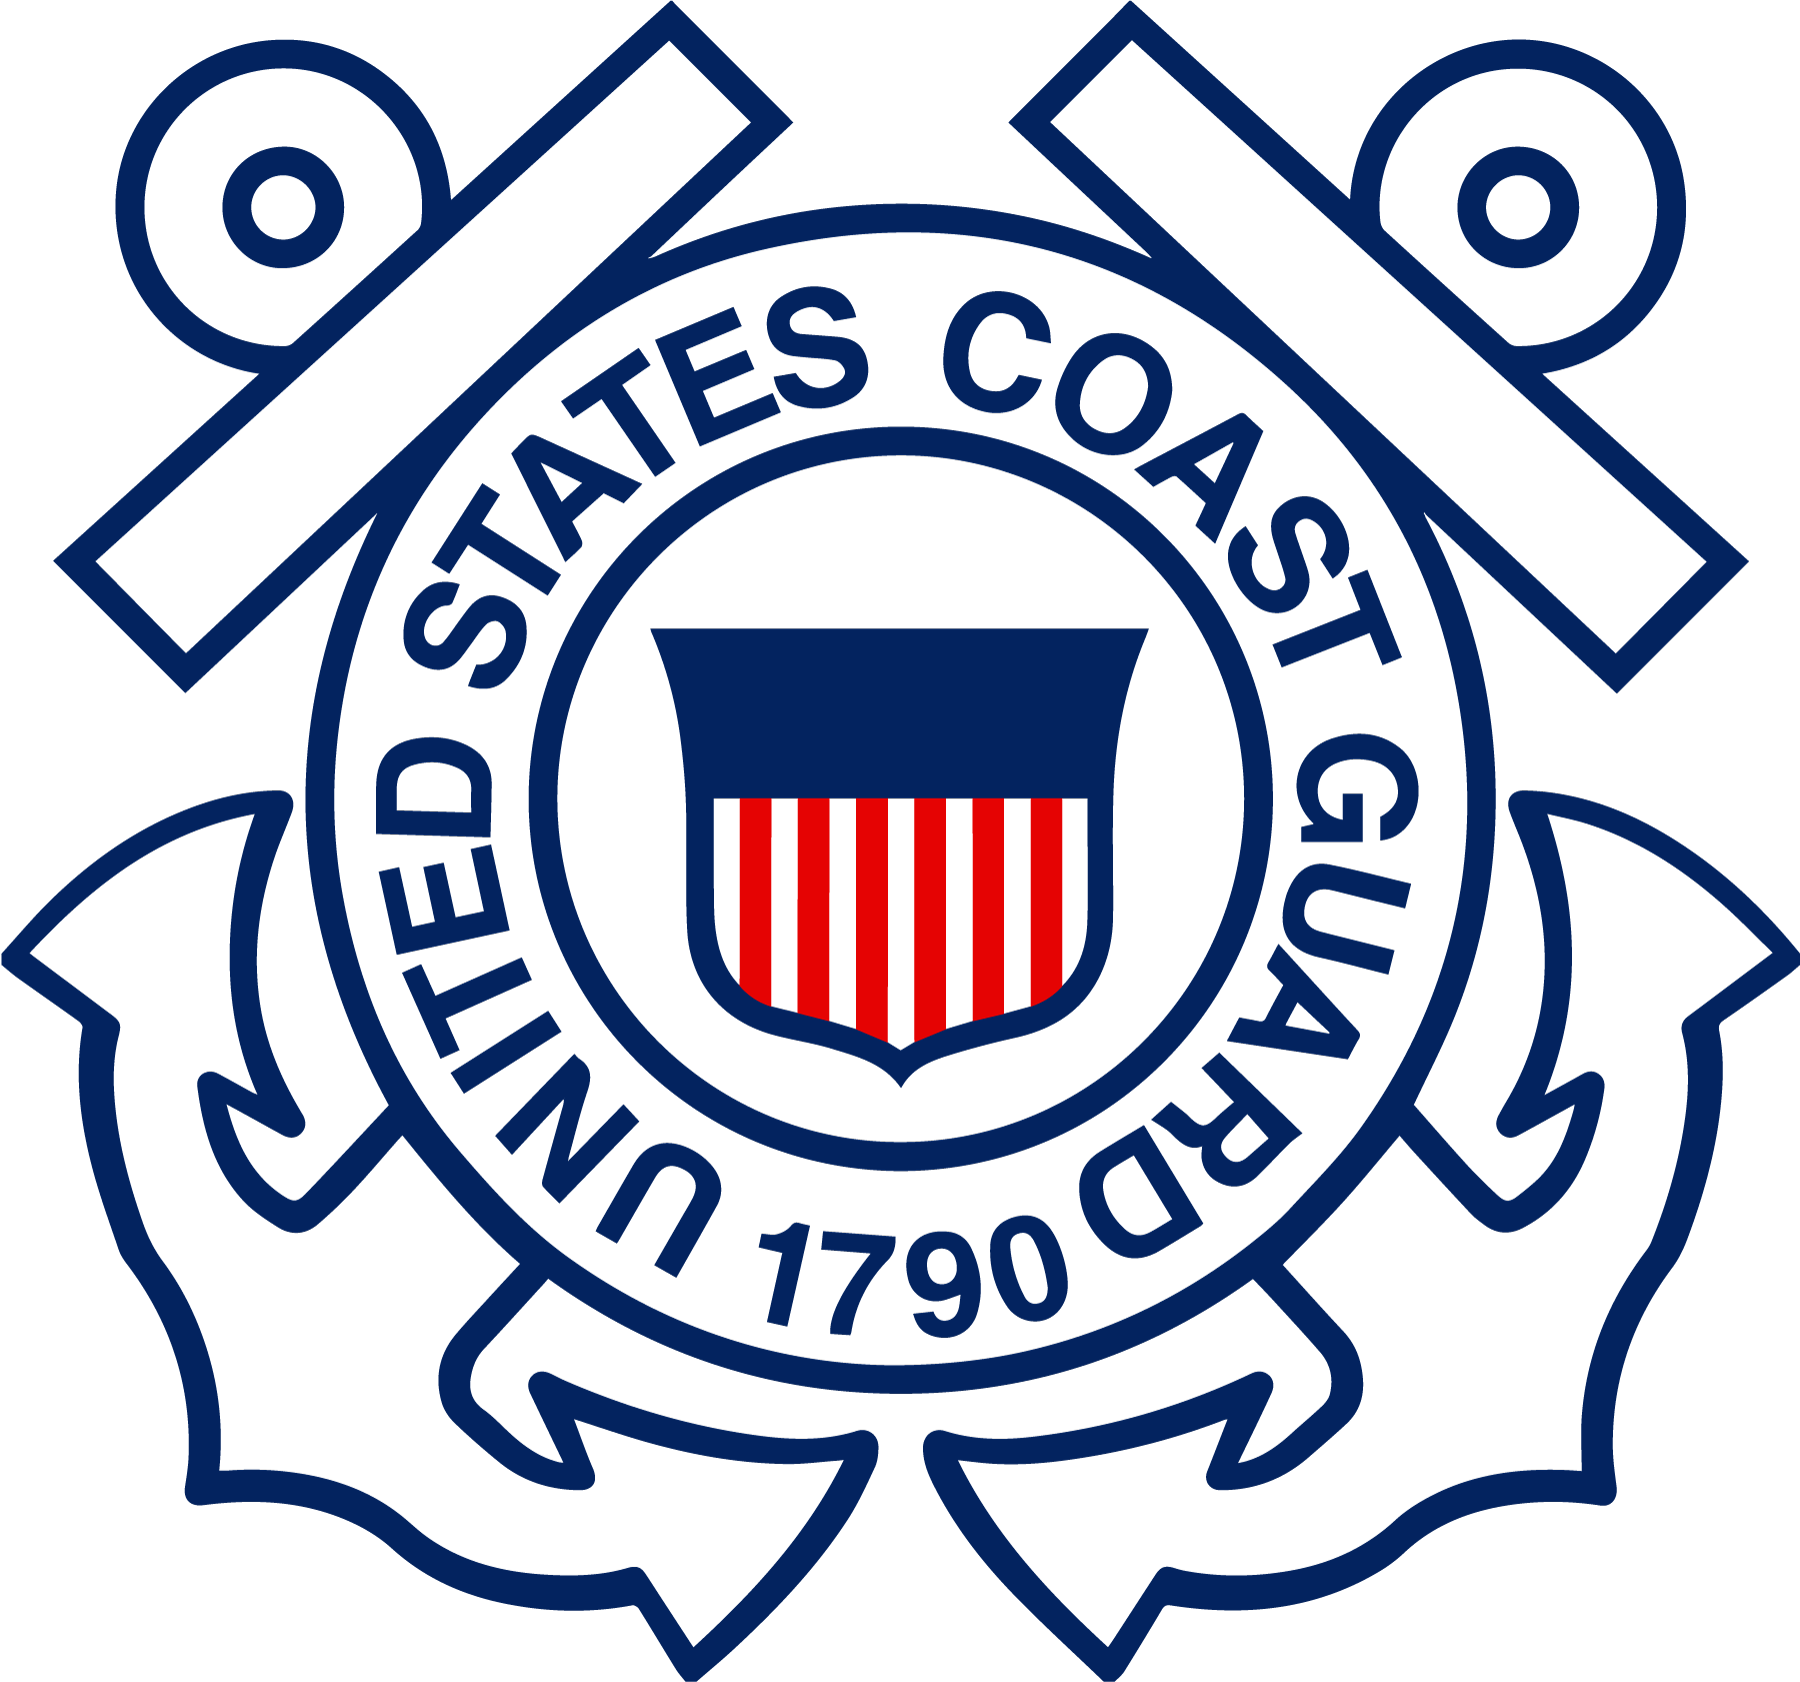 Military Logos Vector - Army, Navy, Air Force, Marines, Coast Guard